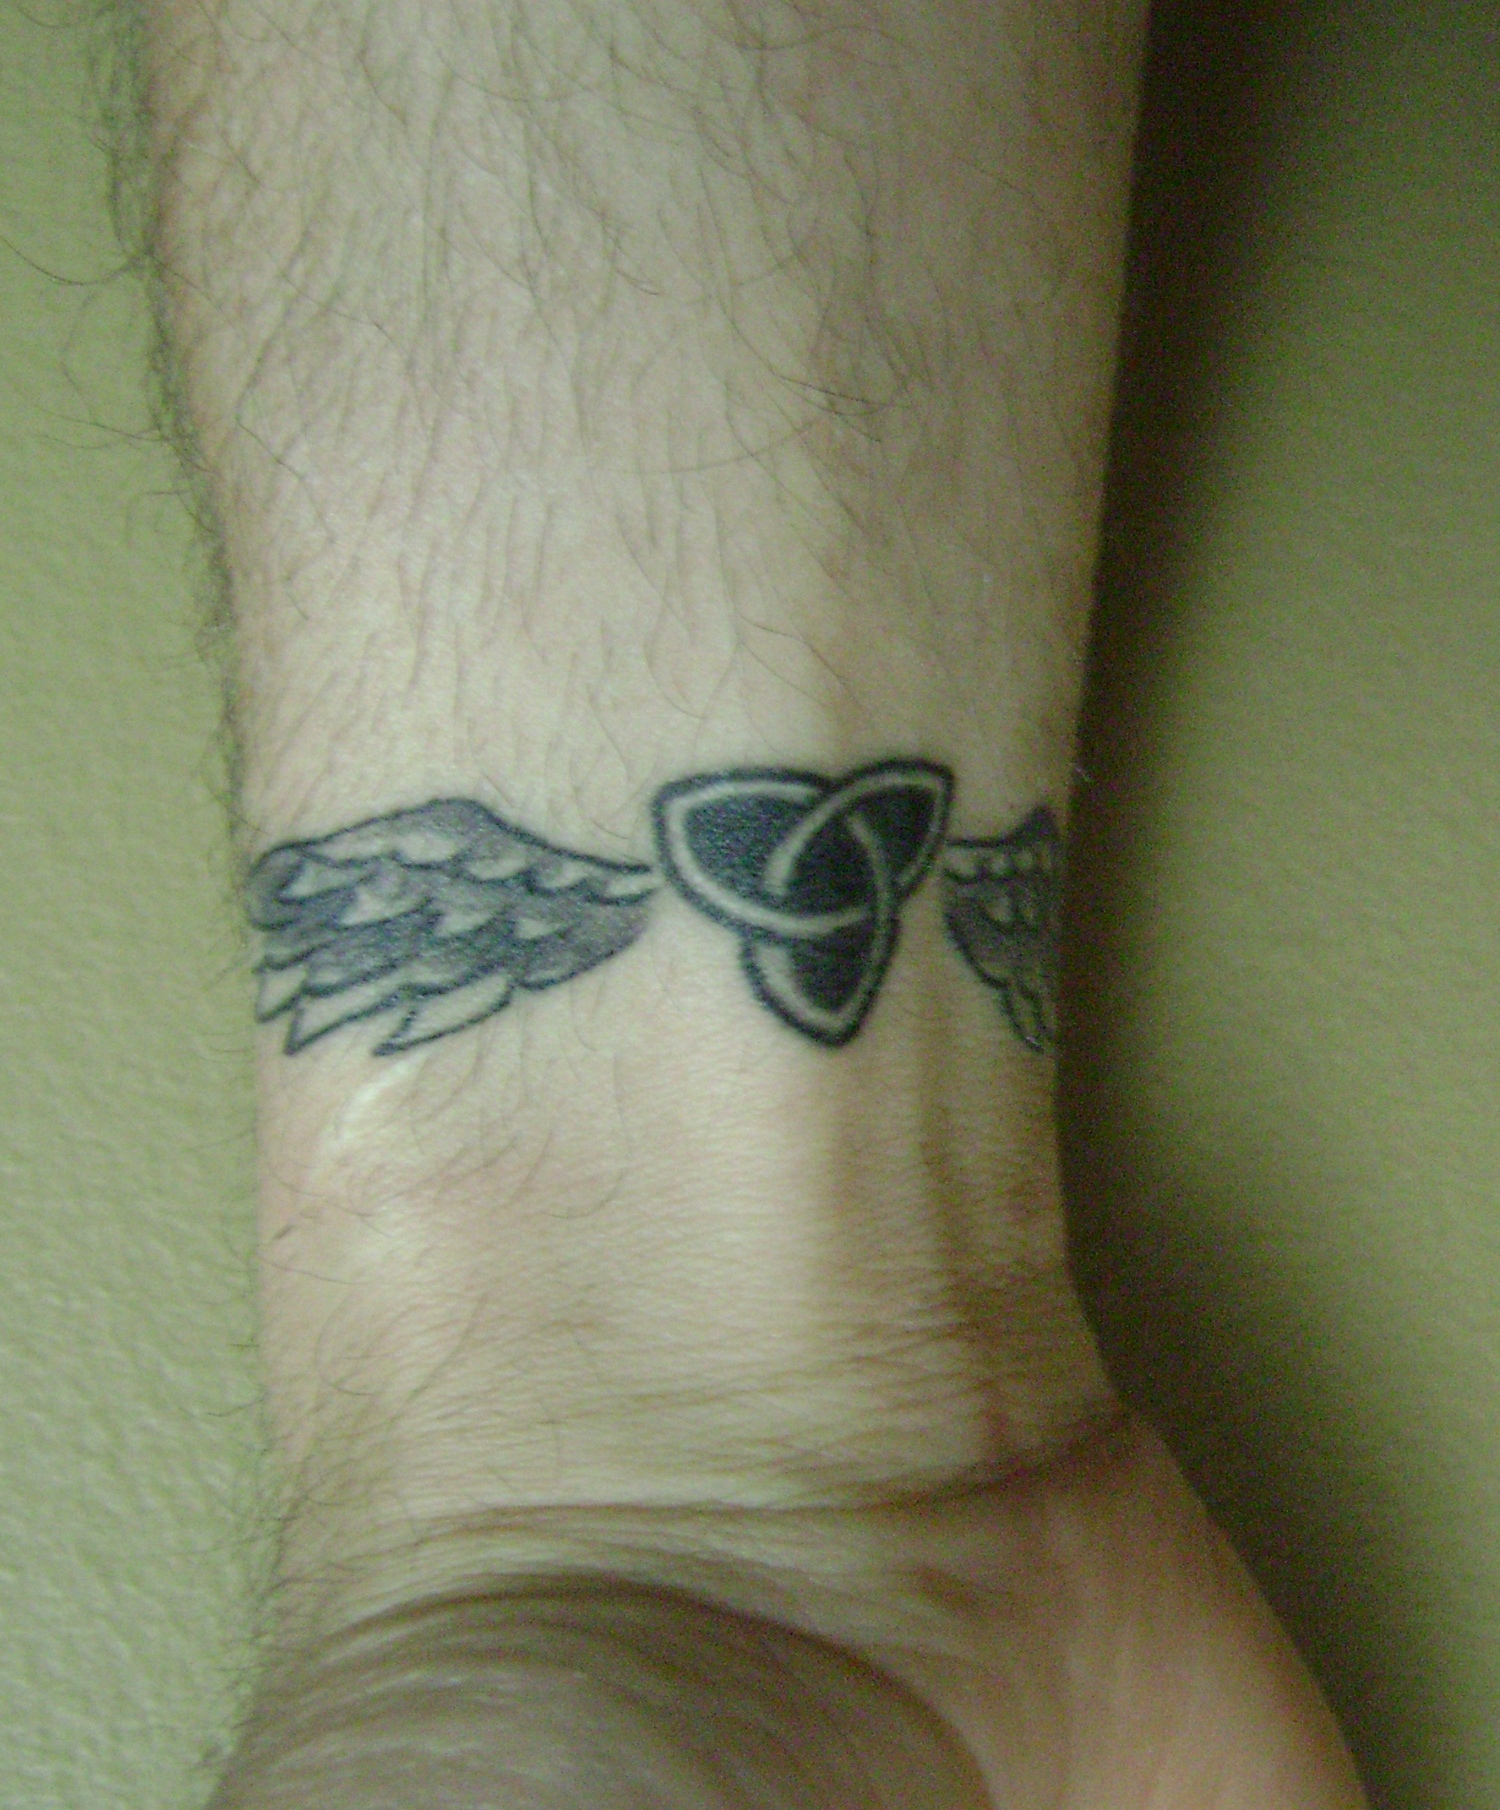 grey-ink-winged-celtic-knot-tattoo-on-wrist